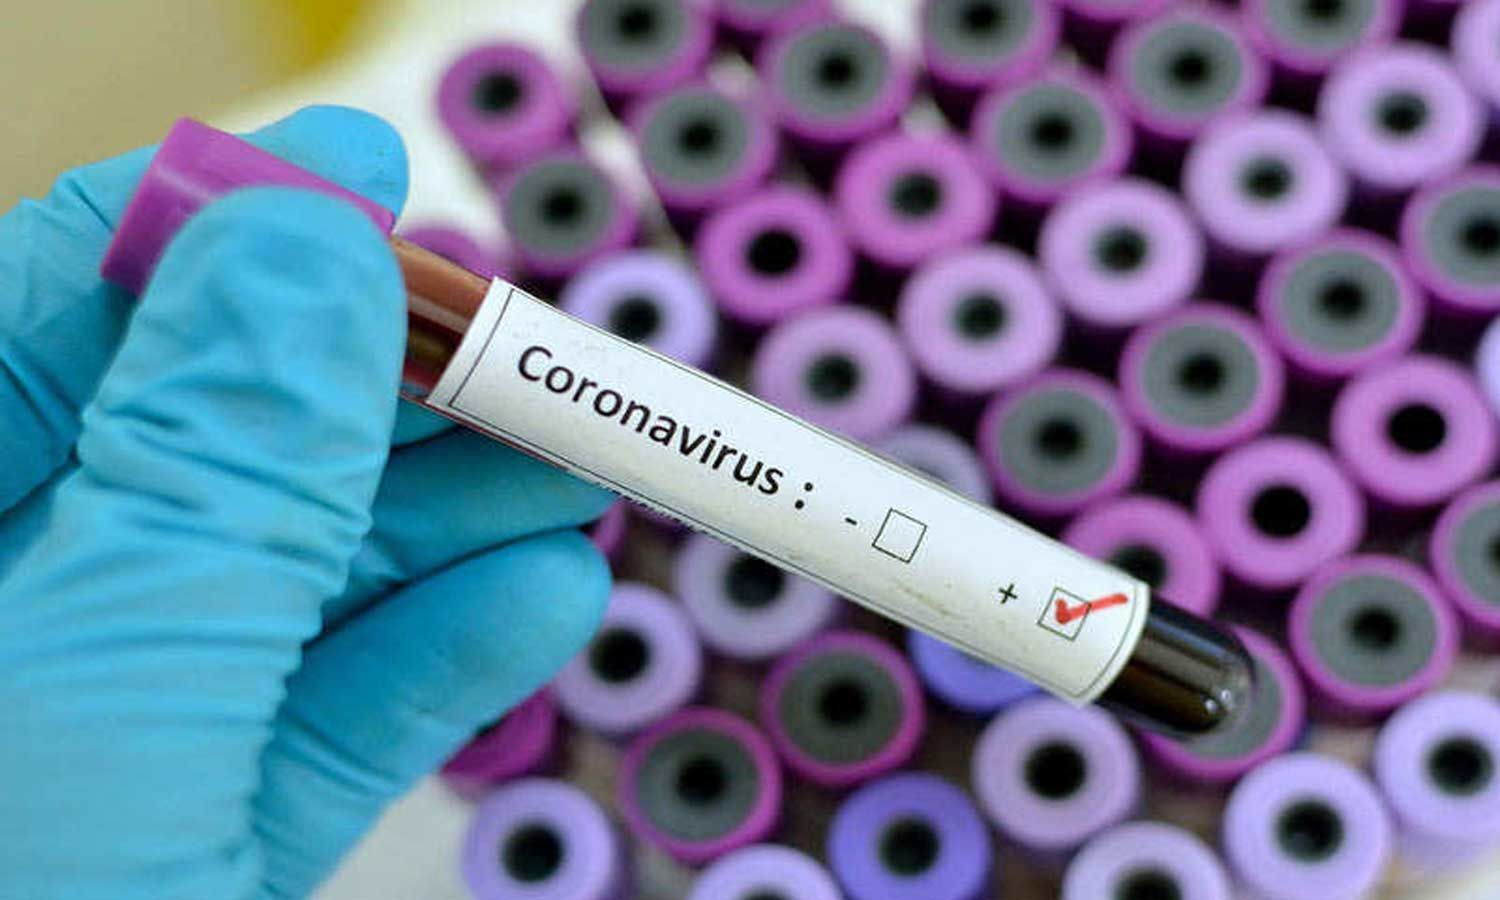 Coronavirus Vaccine Research and Development Timeline